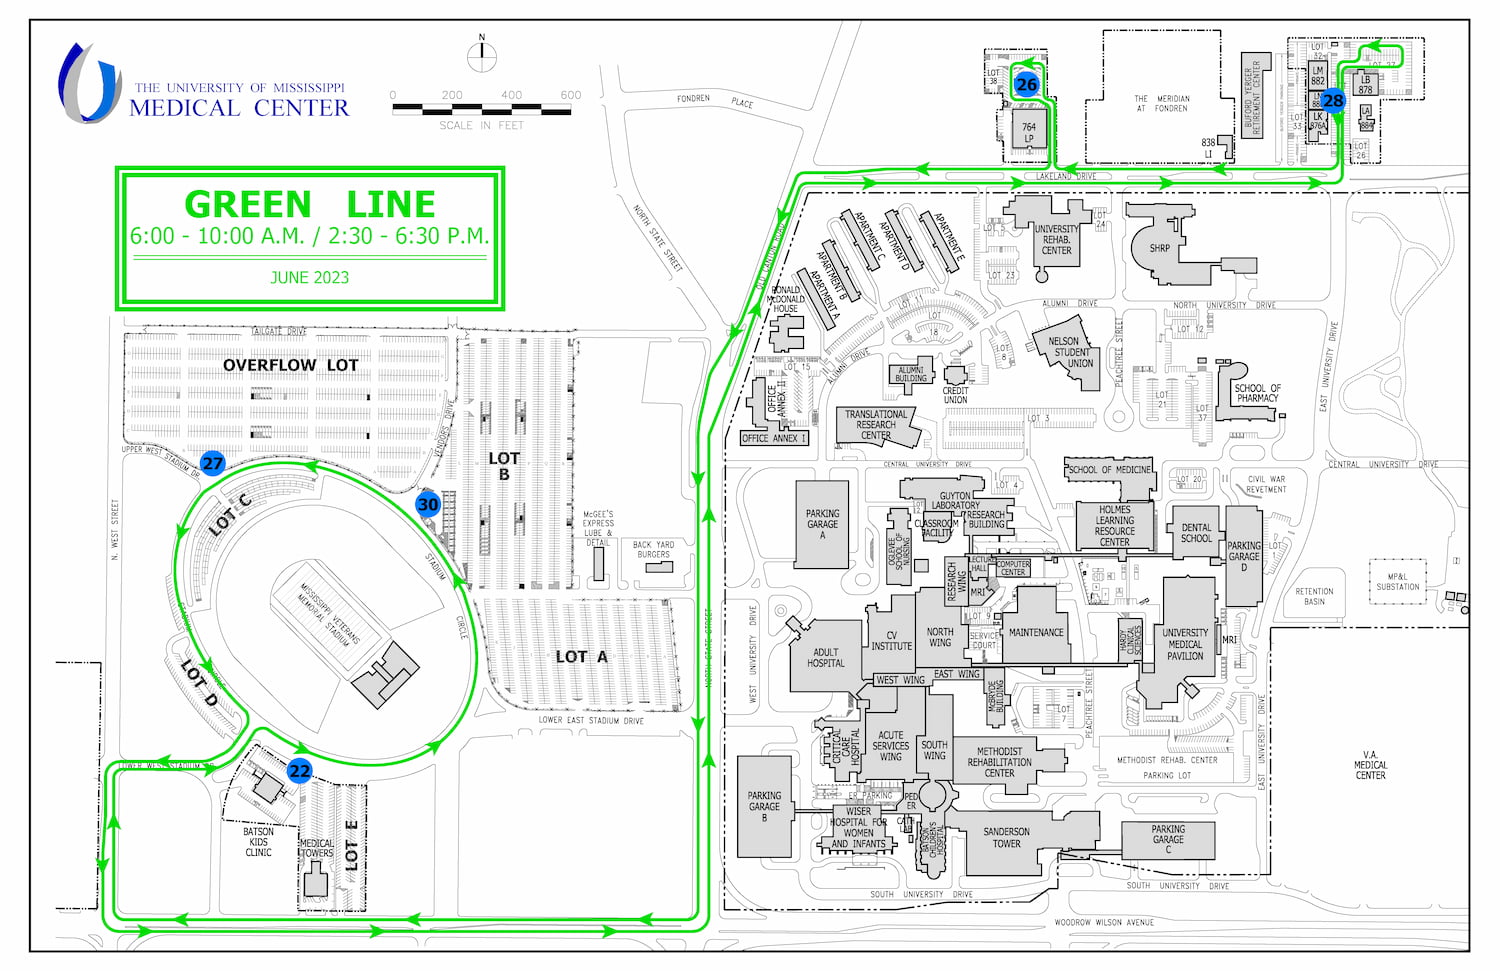 Shuttle Green Line Map - click below for full image long description.